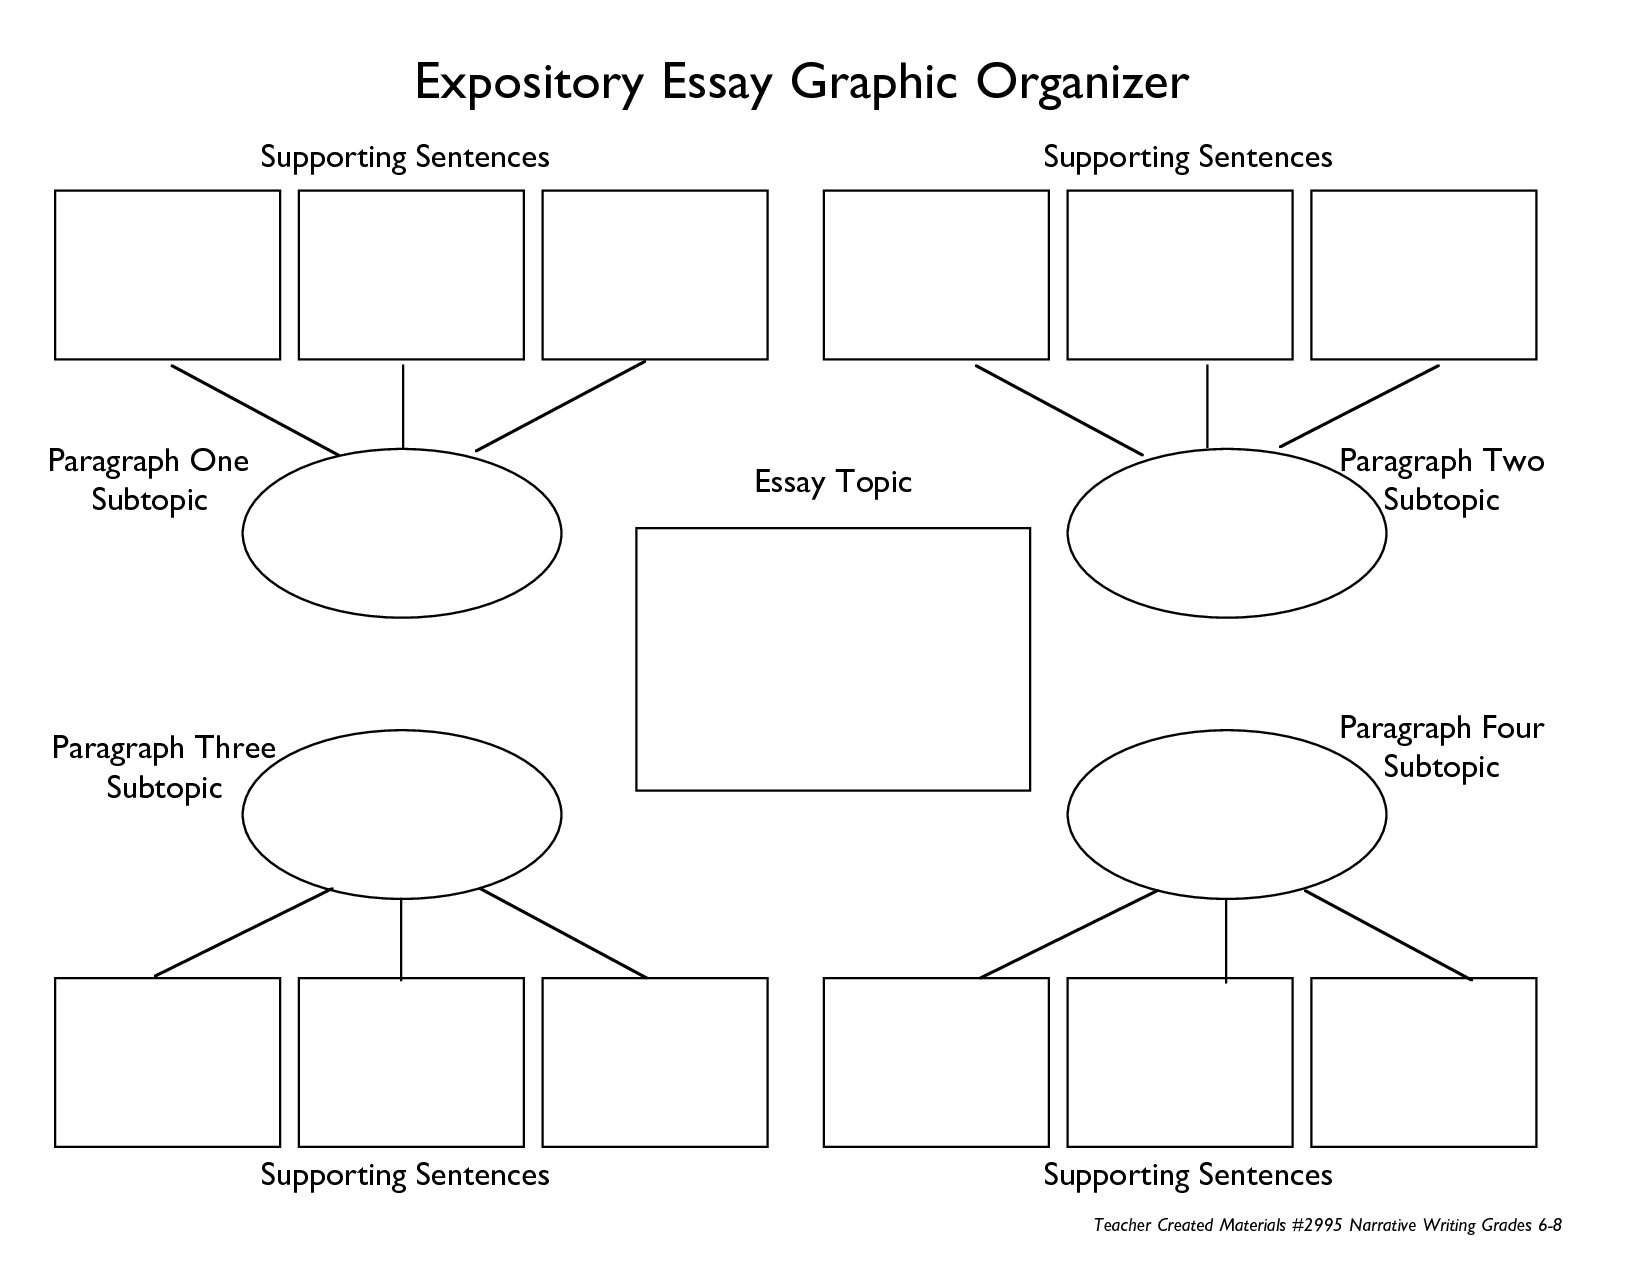 Writing Expository Essay Graphic Organizer Image